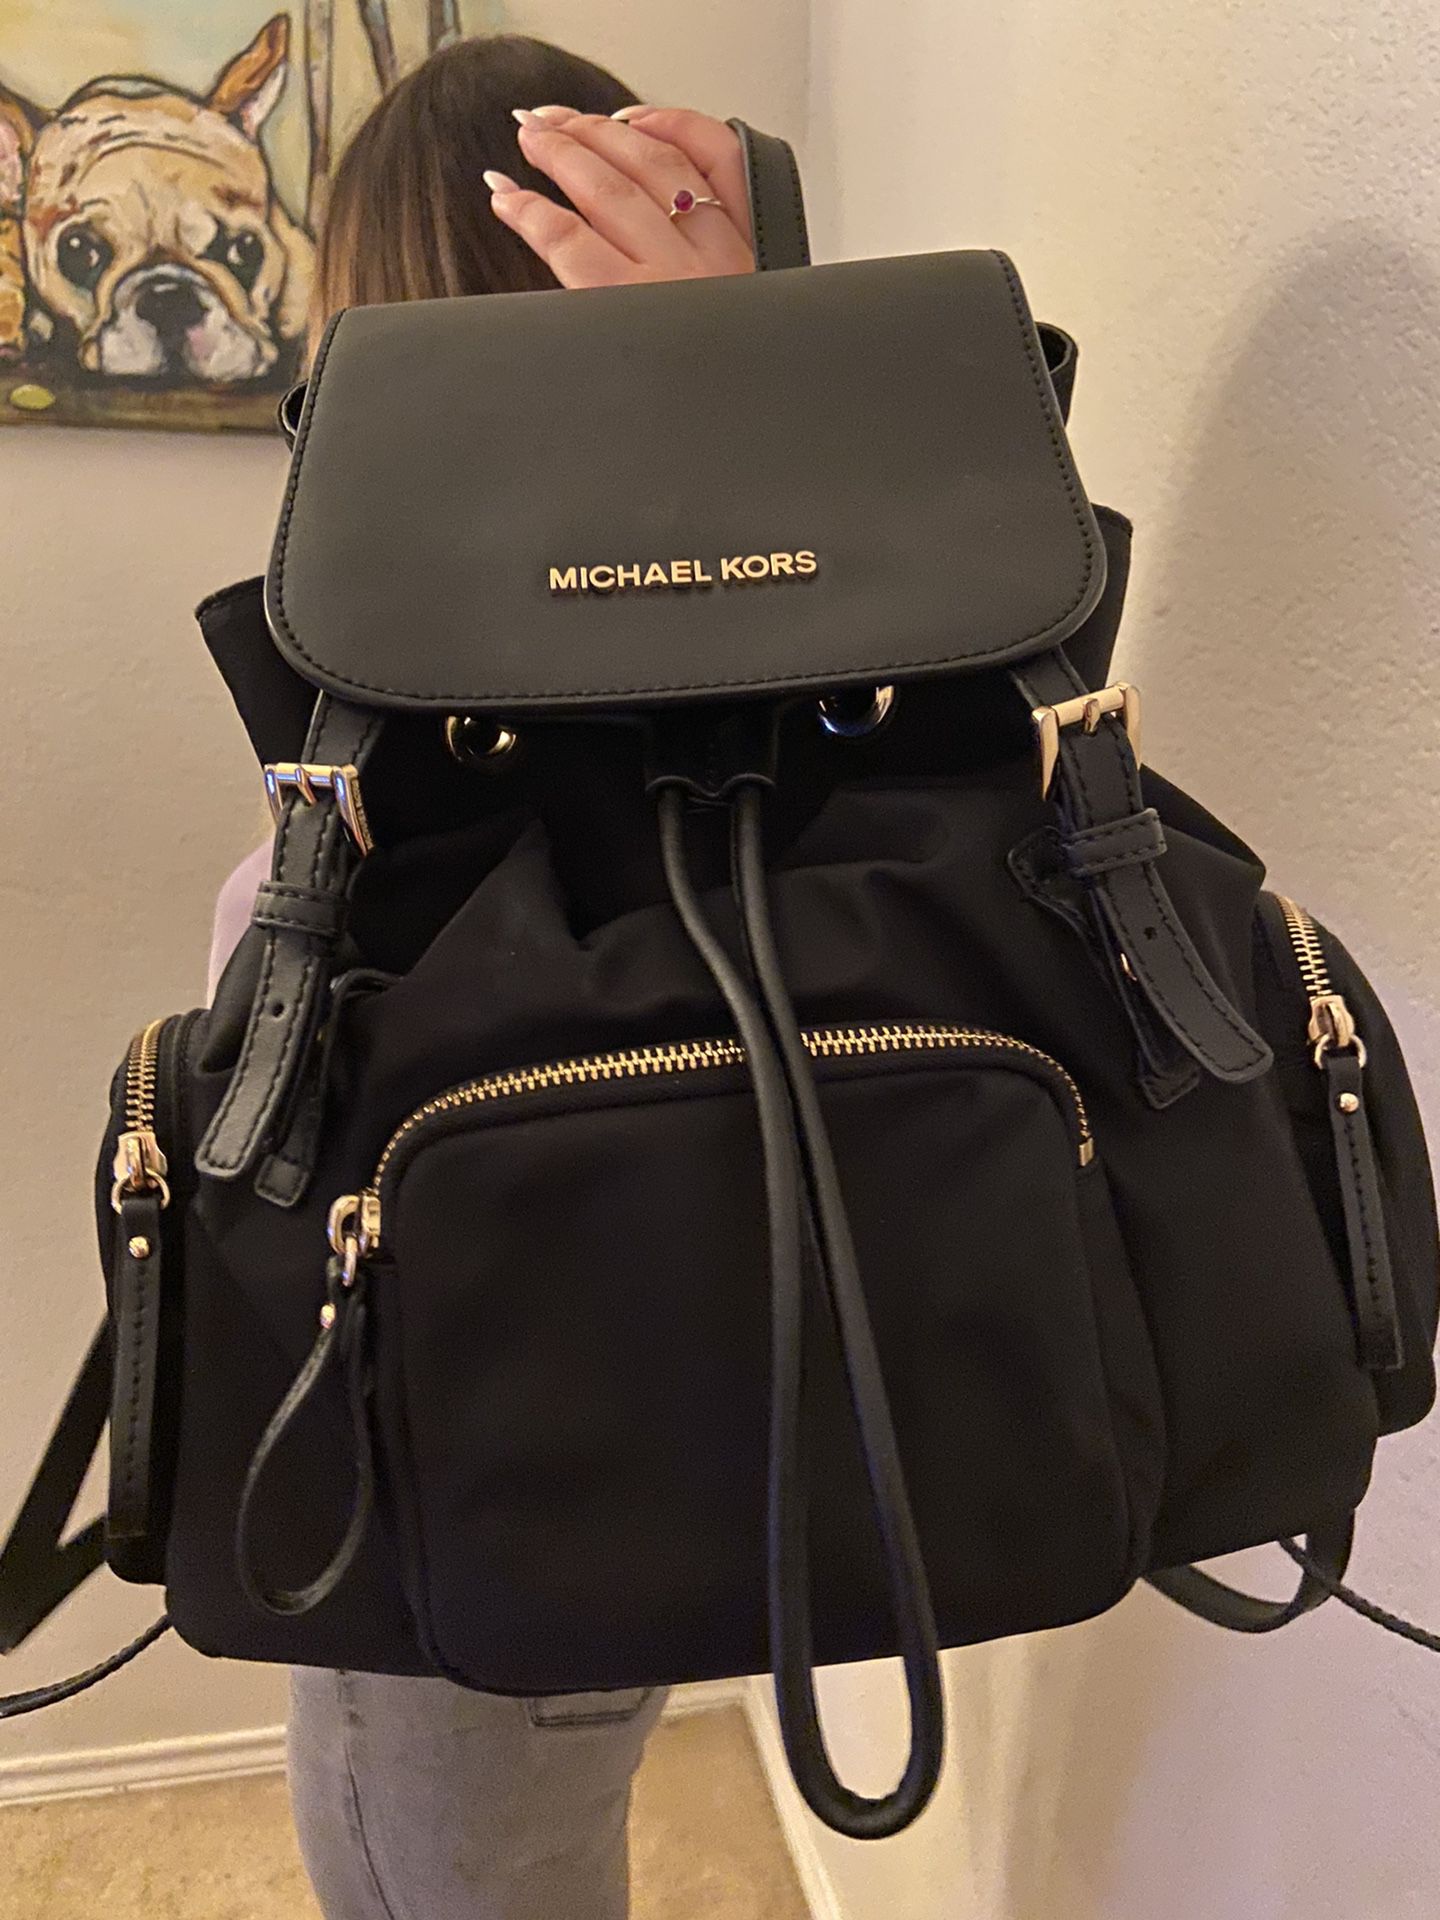 Michael Kors Backpack & Heart Wallet